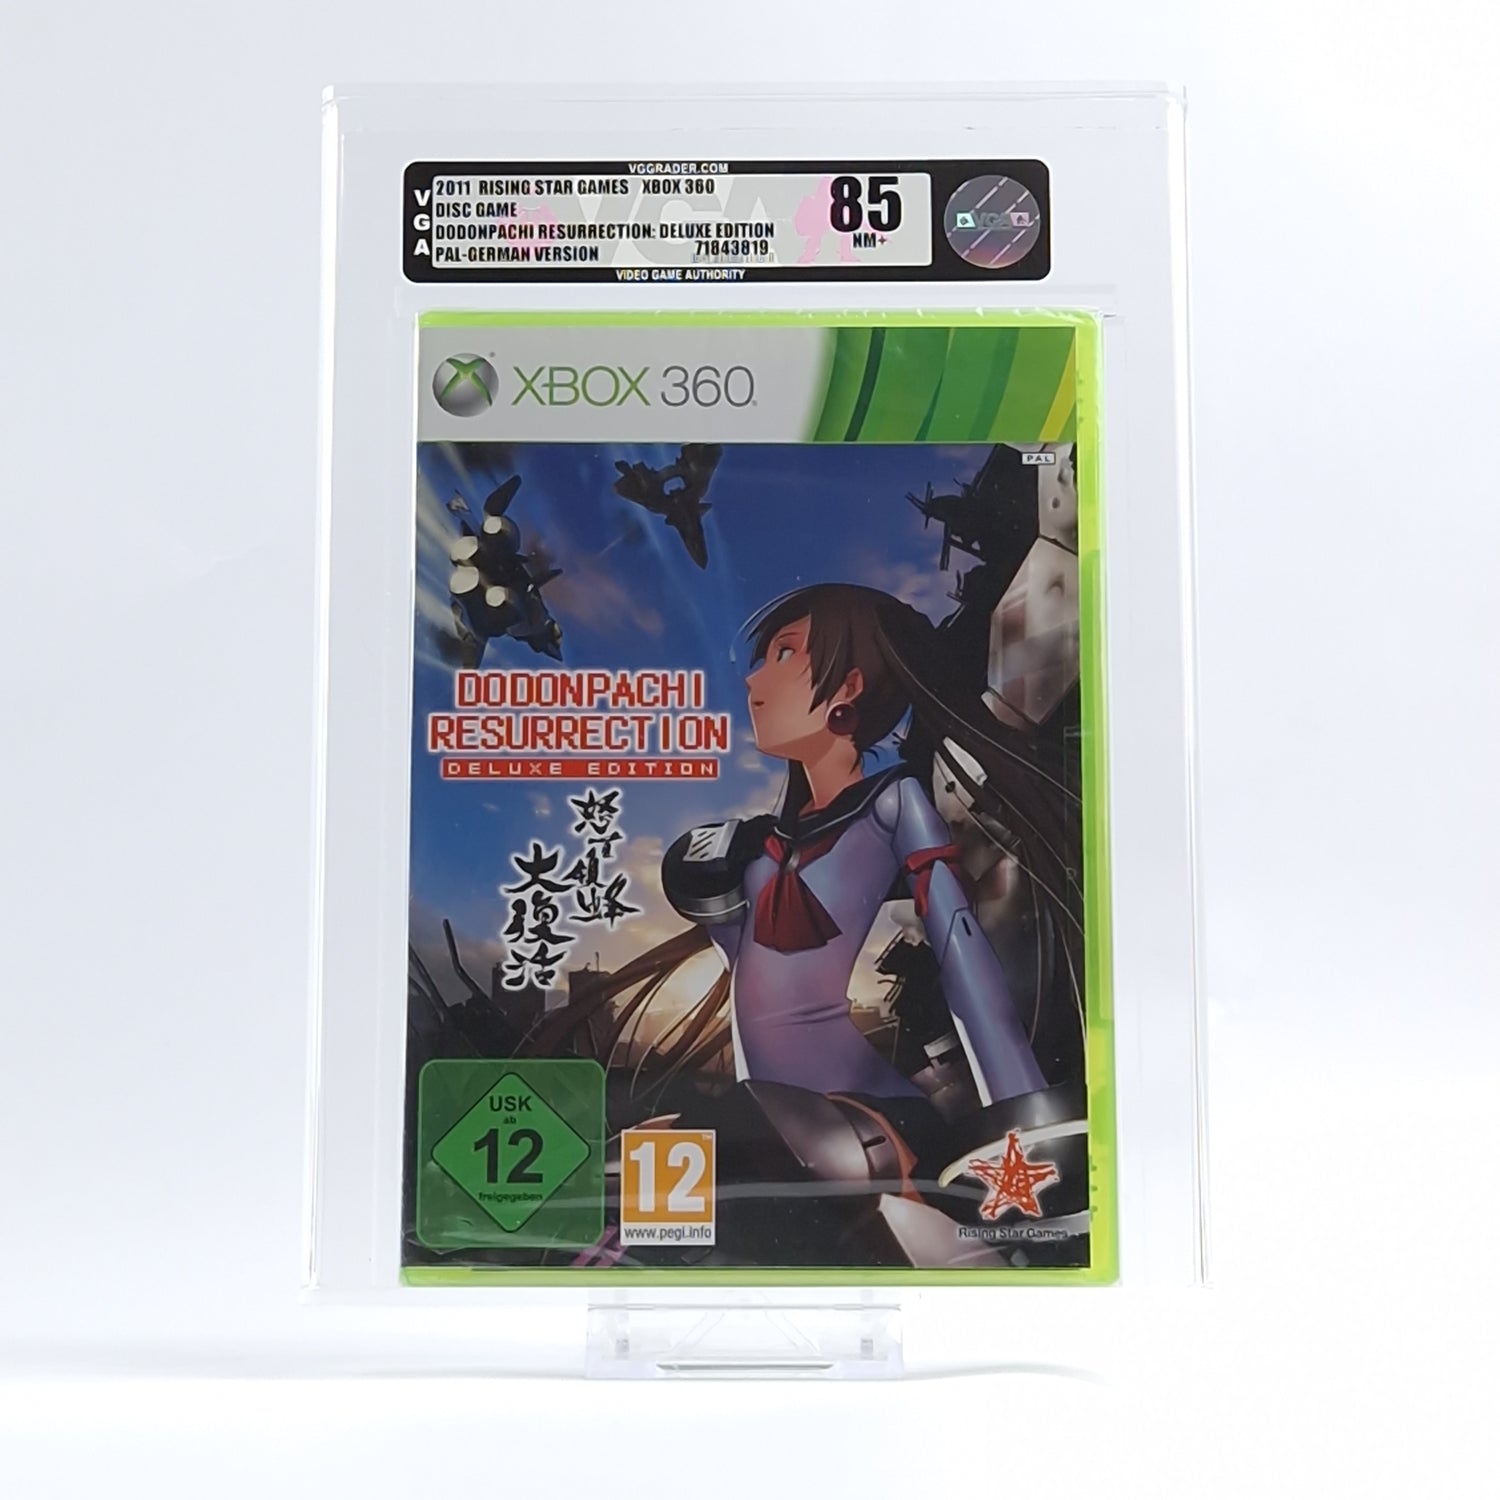 Xbox 360 Game: Dodonpachi Resurrection Deluxe Edition - OVP NEW SEALED VGA 85